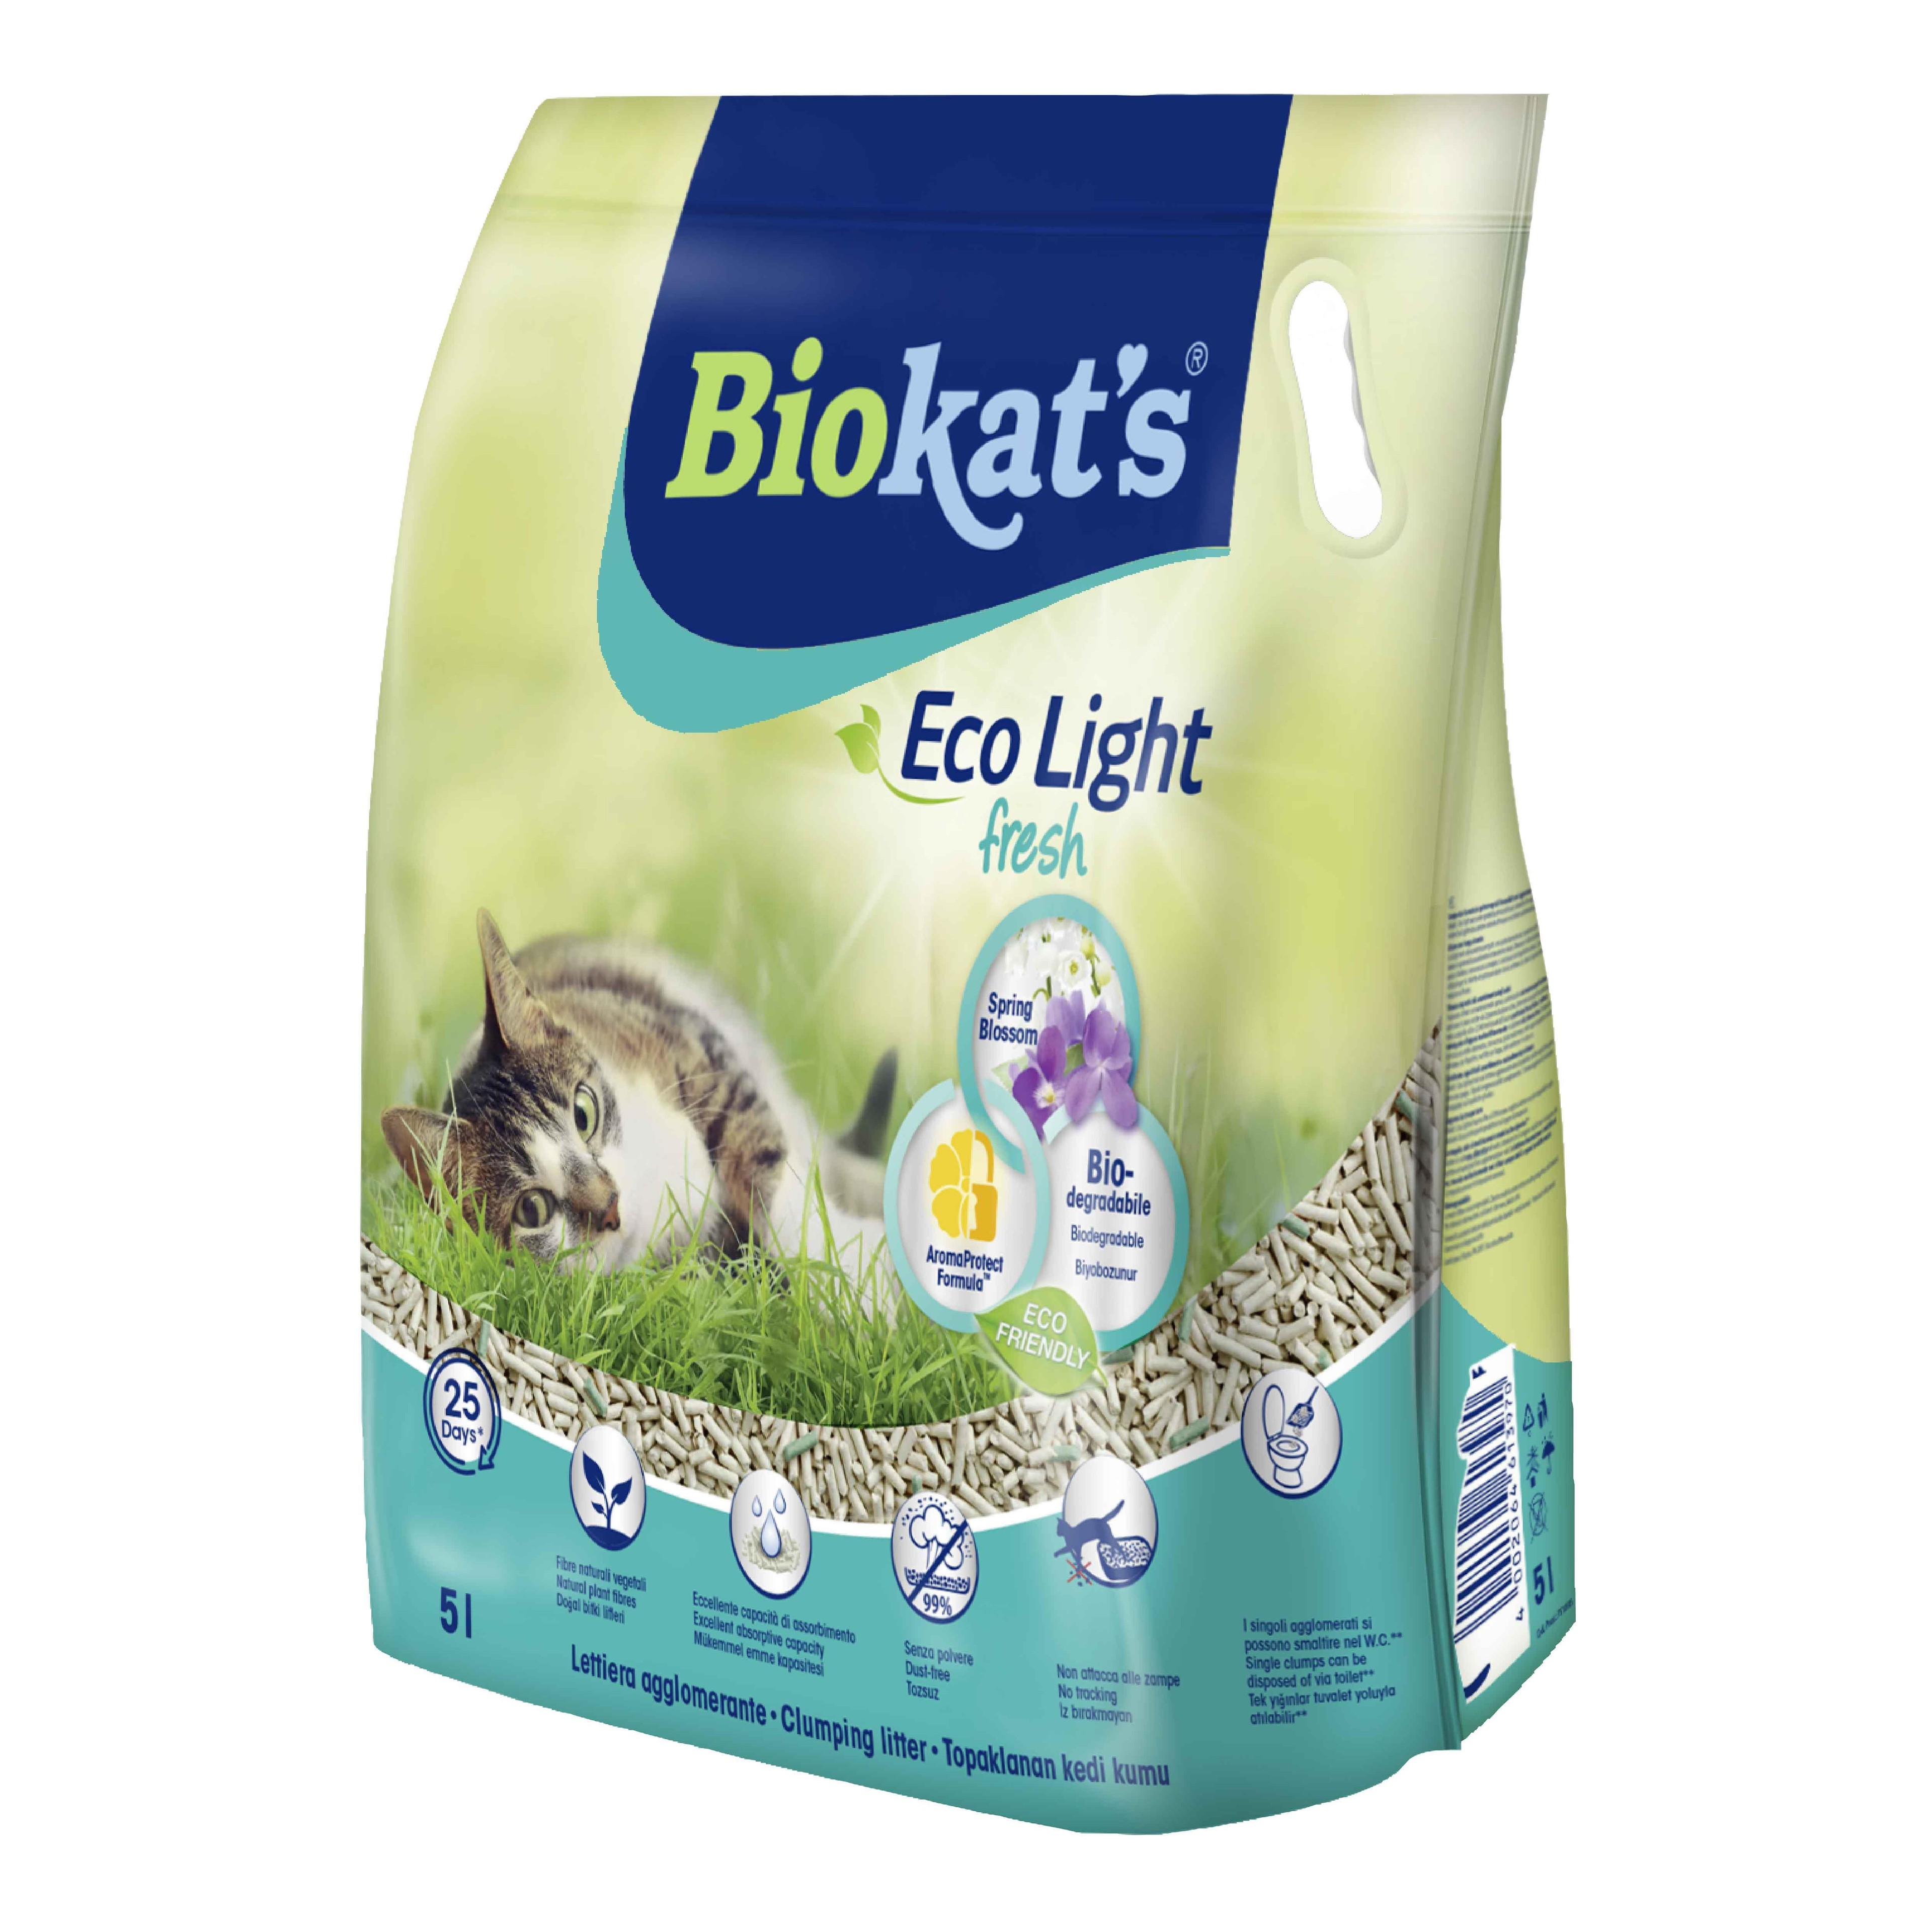 Biokat's Eco Light Fresh Spring Blossom Pelet Kedi Kumu 5 Lt